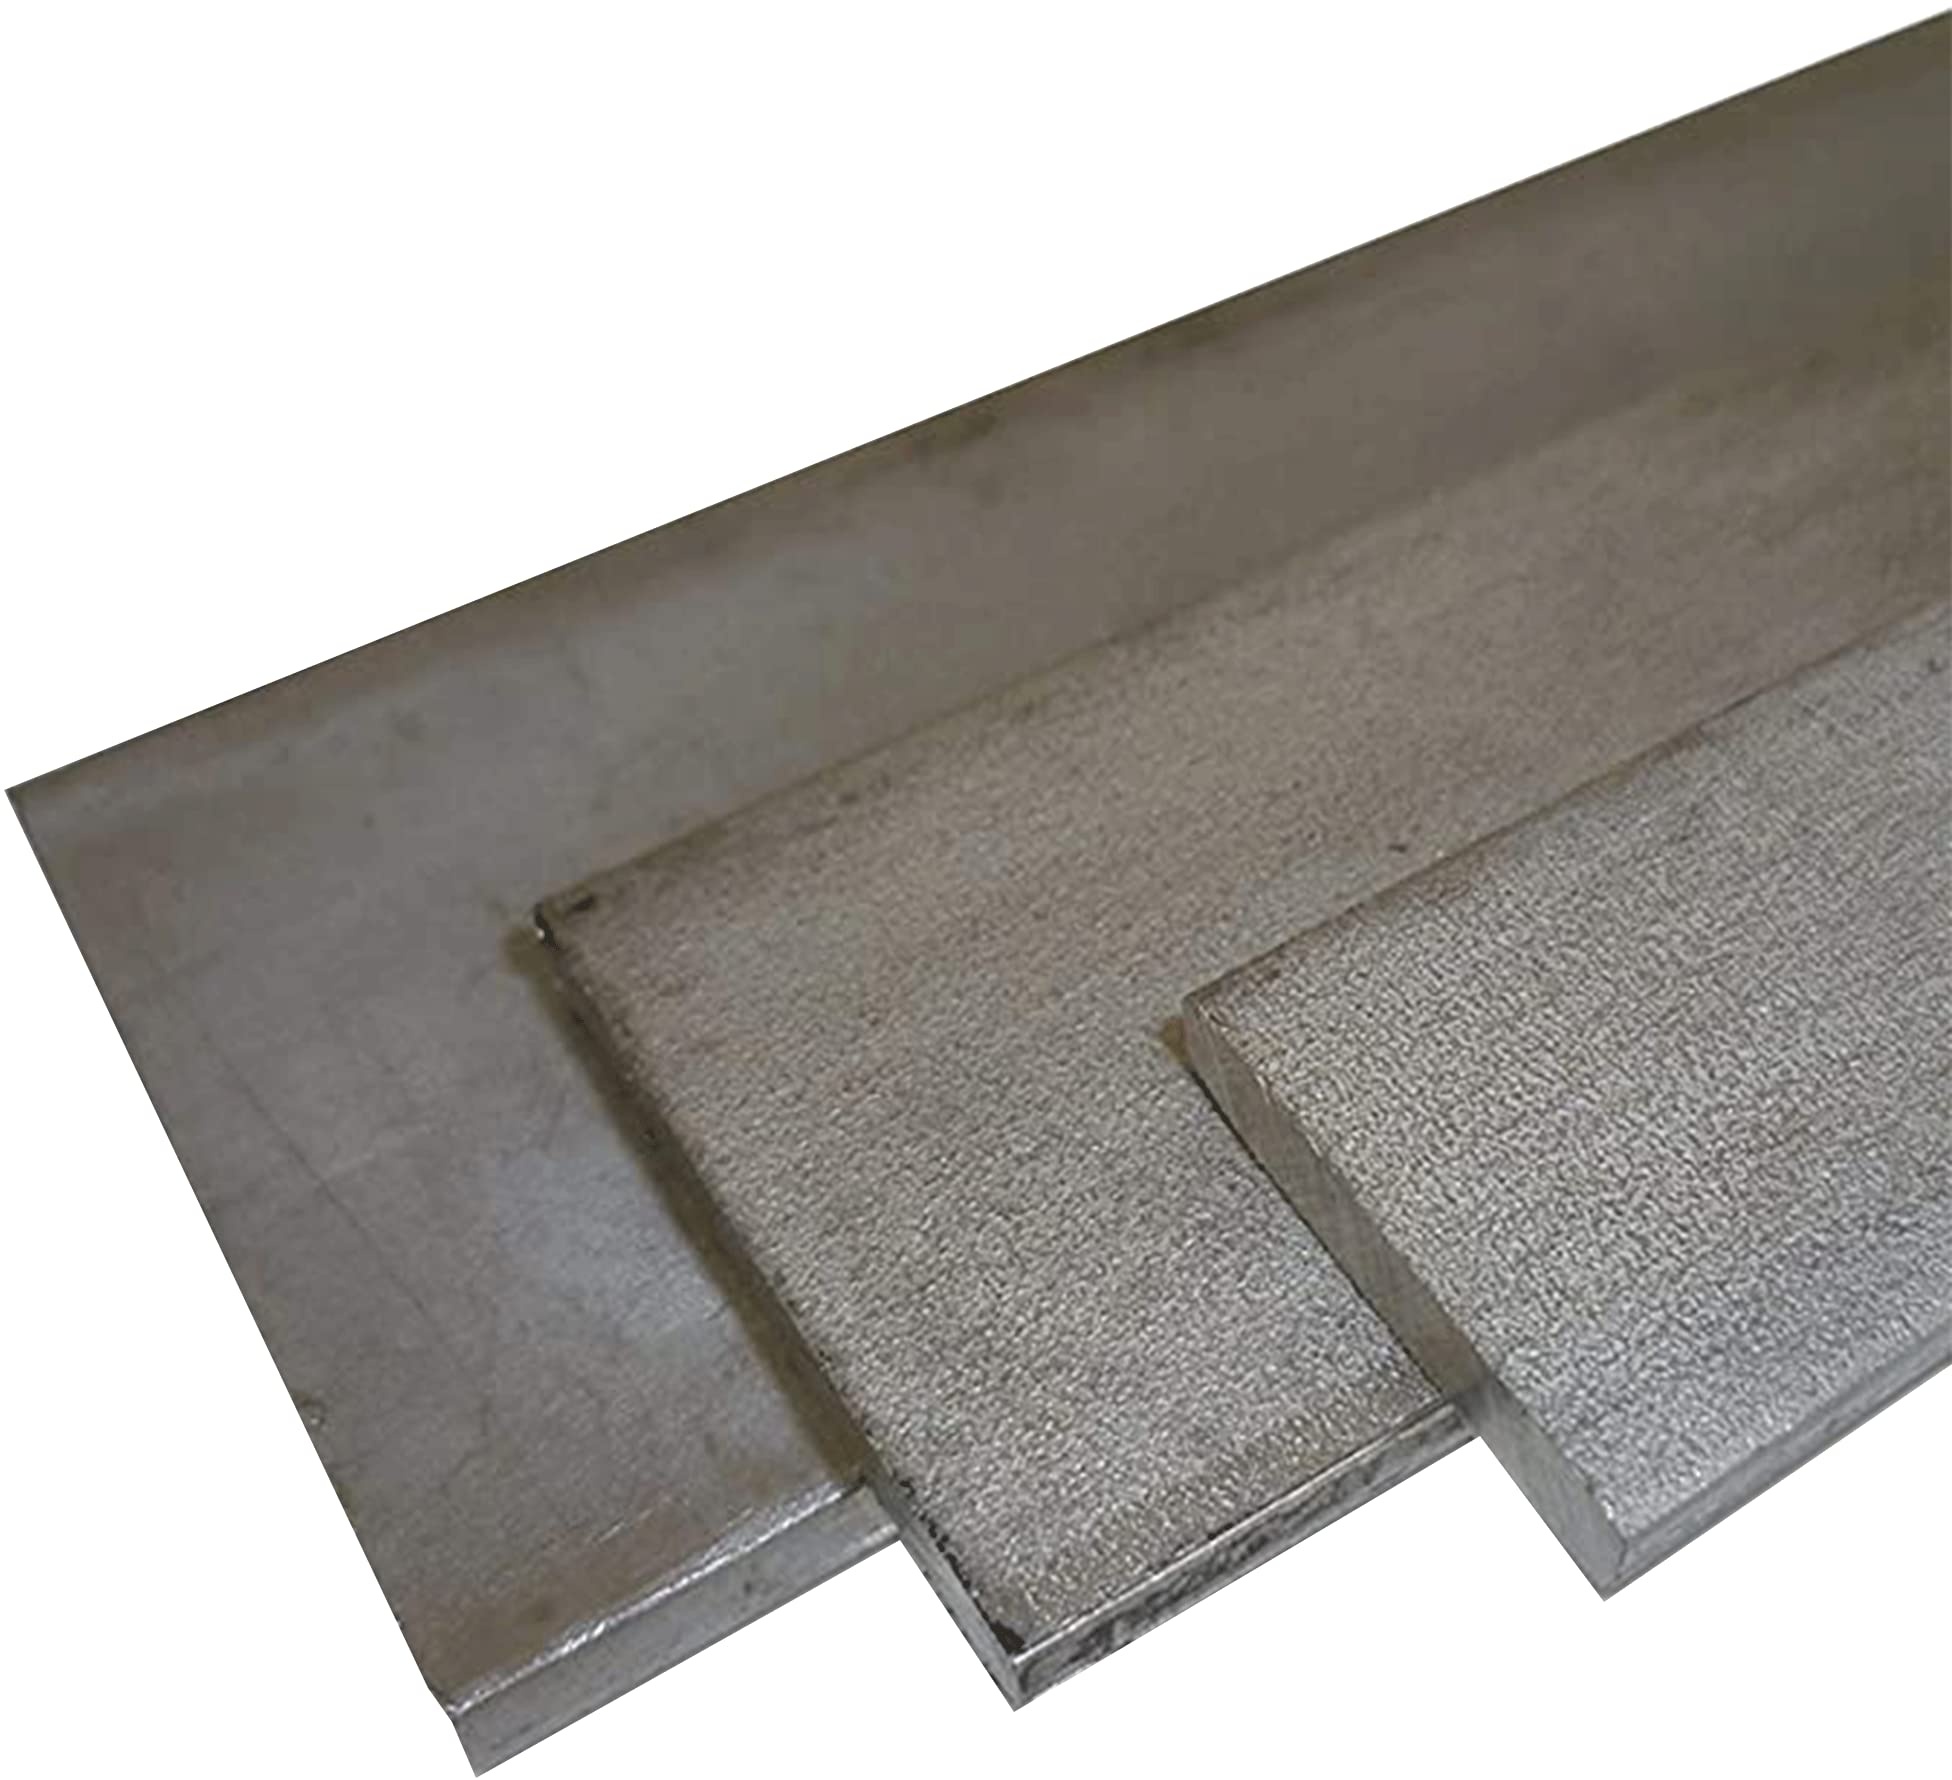 B&T Metall Edelstahl Flachstahl | Bandstahl 1.4301 V2A, roh, gewalzt | Maße 50 x 4 mm, Länge ca. 2,0 m